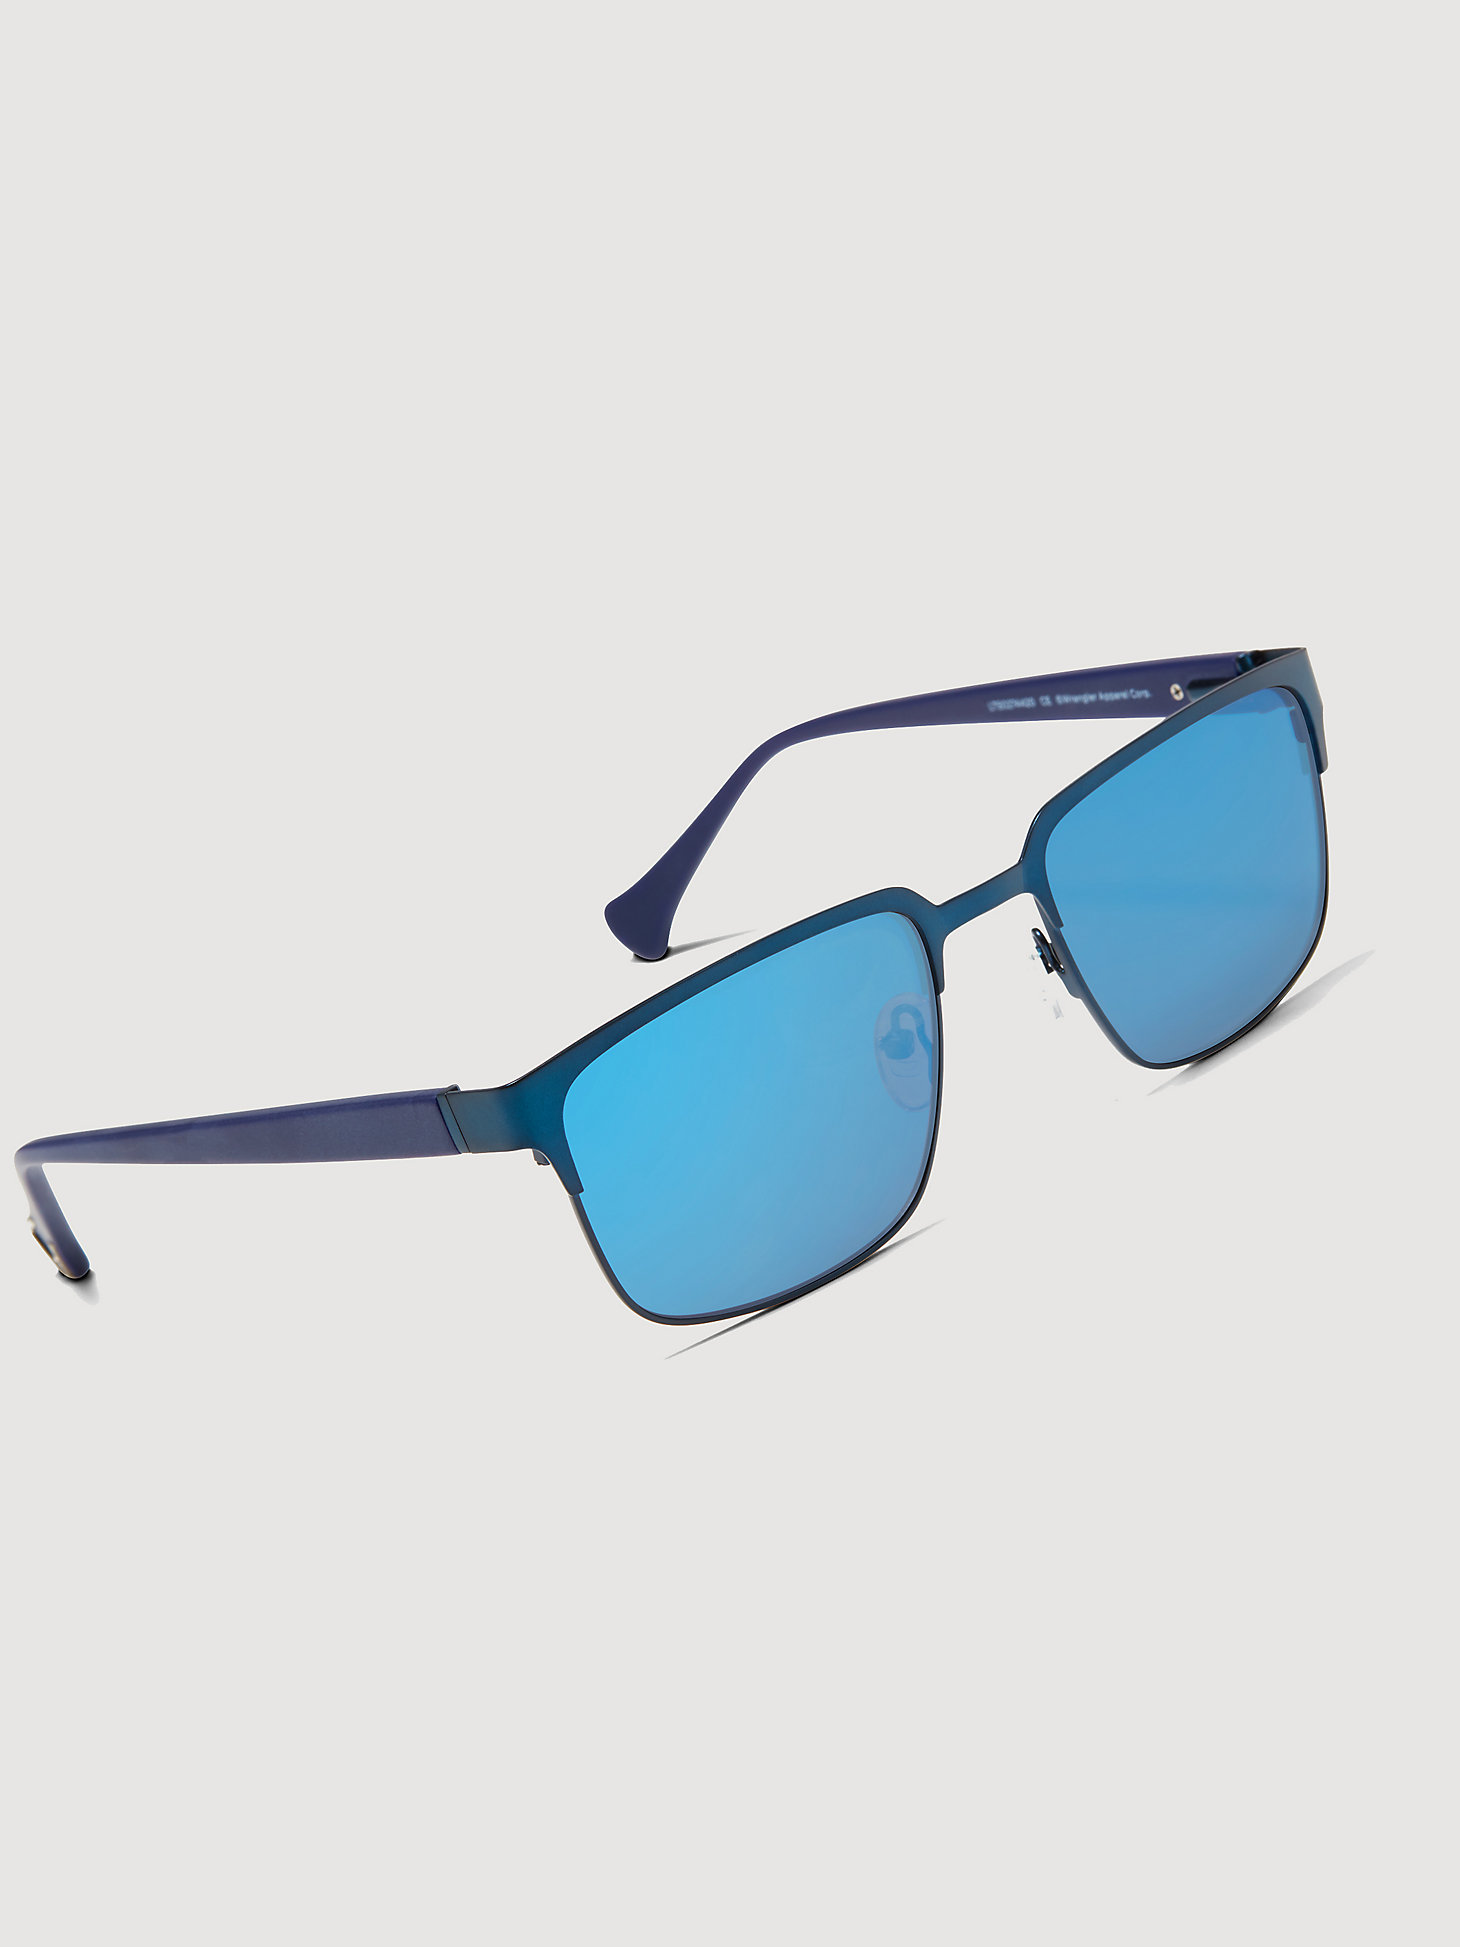 Men's Rectangle Sunglasses in Blue alternative view 2